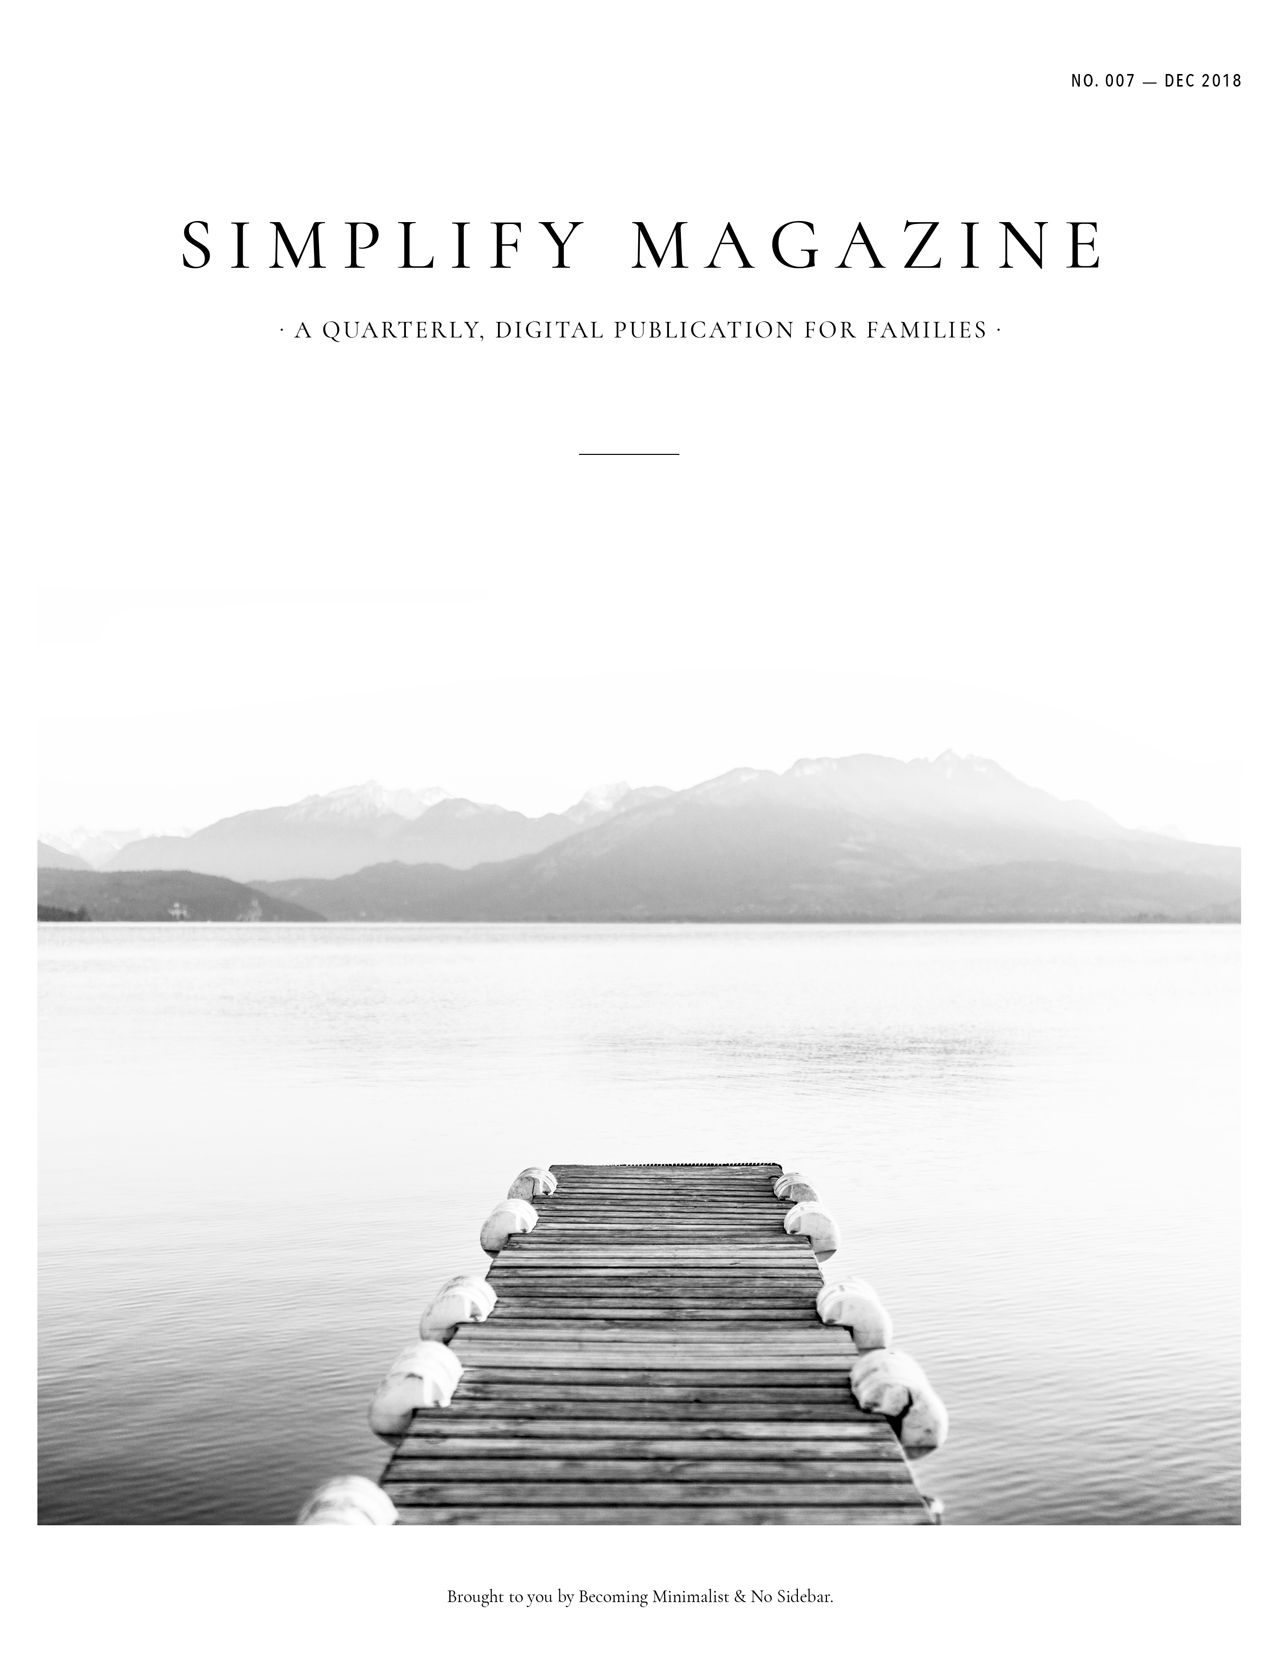 Simplify Magazine Issue #007